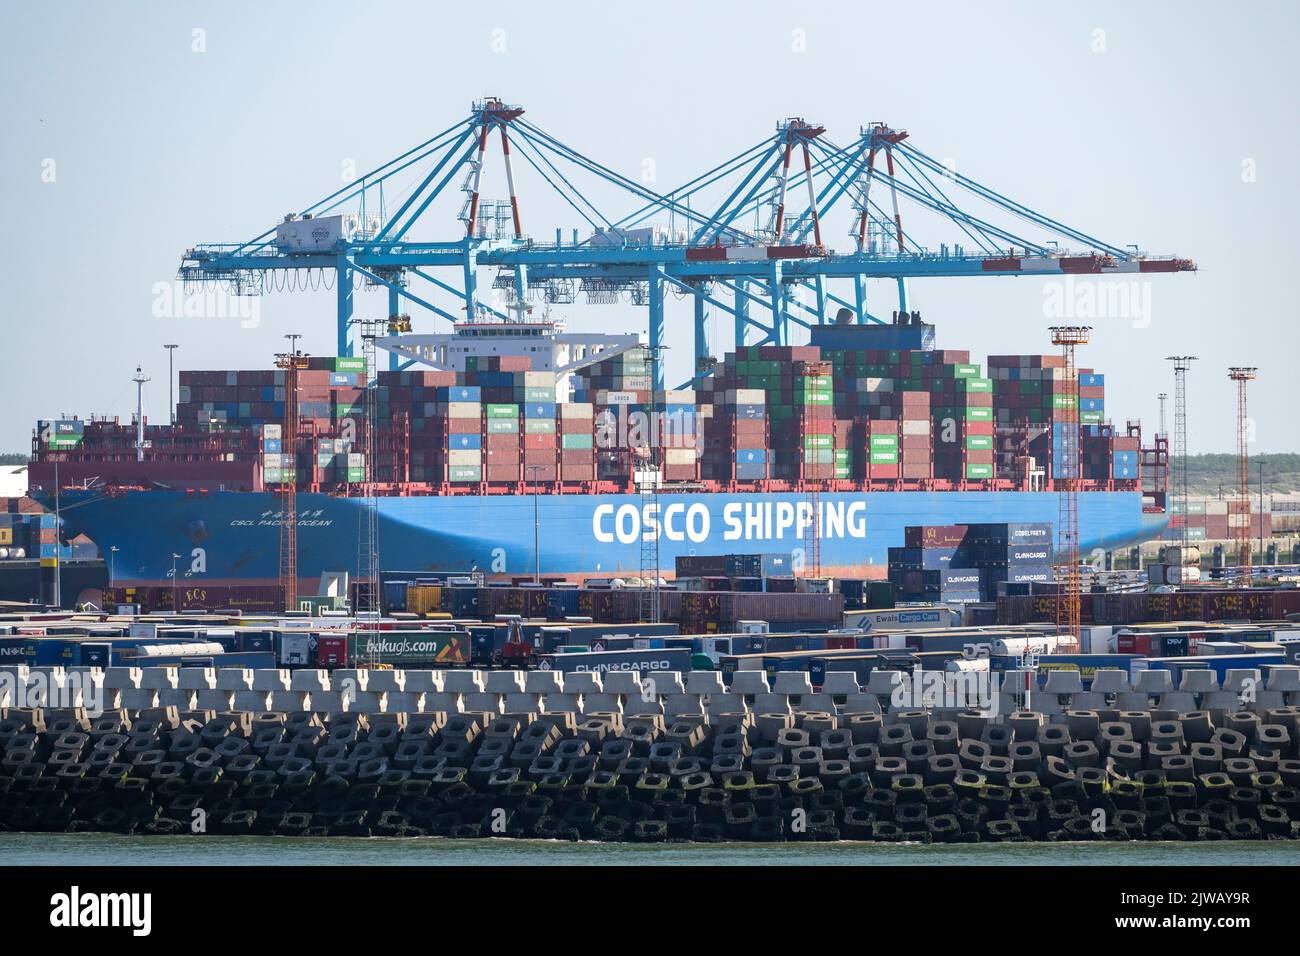 Ein COSCO Shipping Frachtschiff am Dock in Brügge, Belgien. Stockfoto